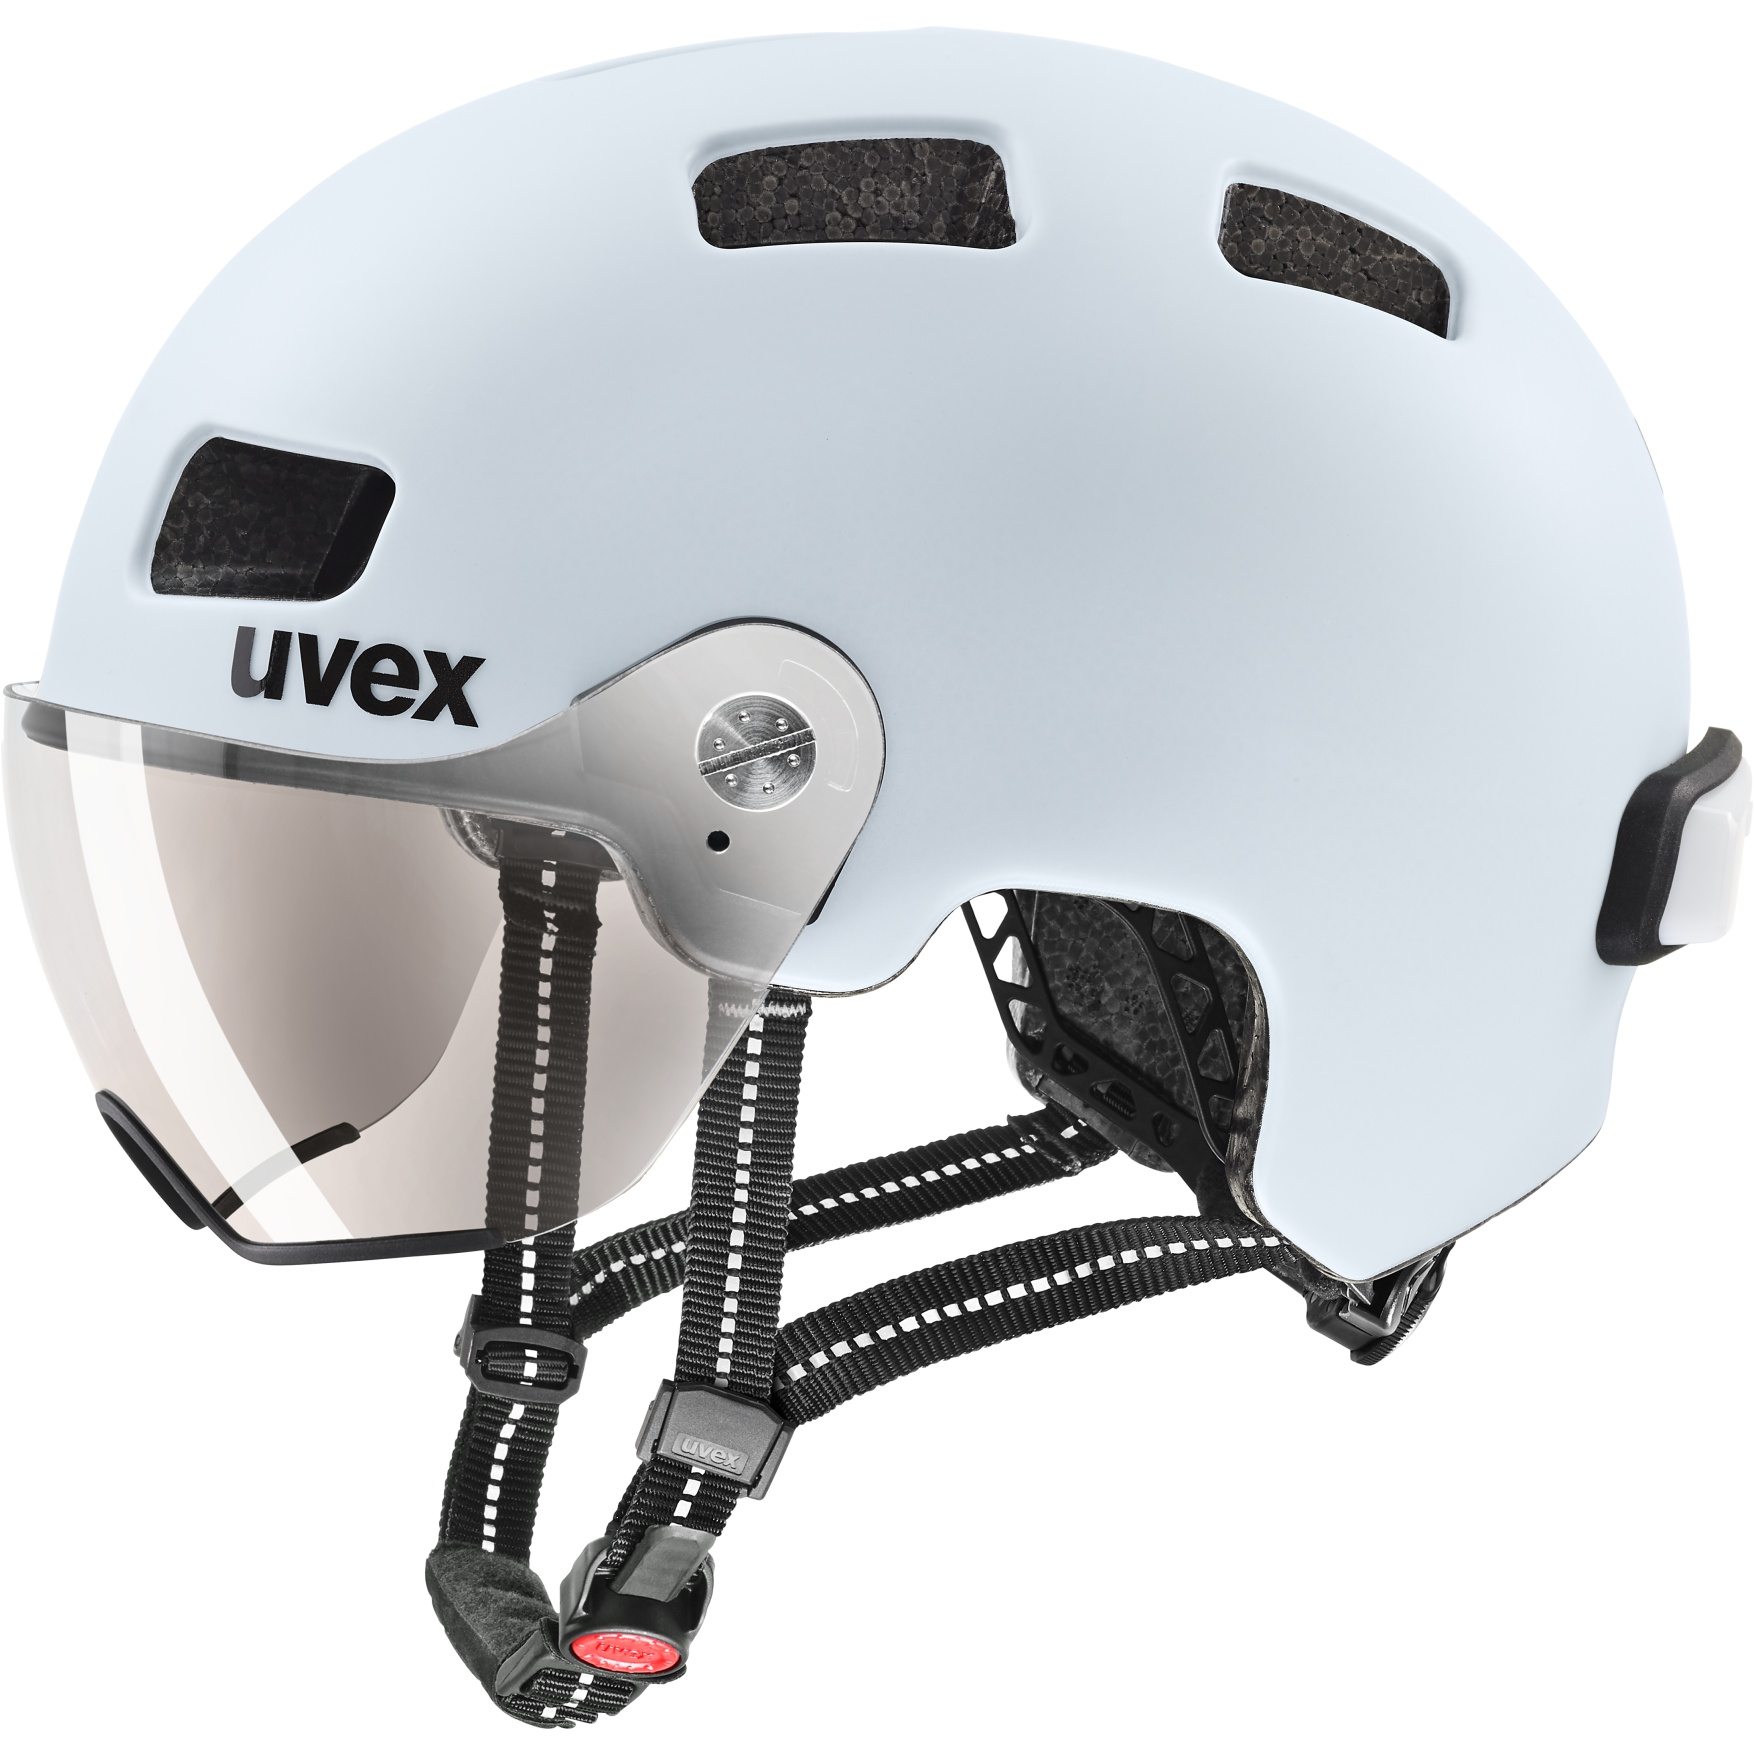 Productfoto van Uvex rush visor Helm - cloud matt